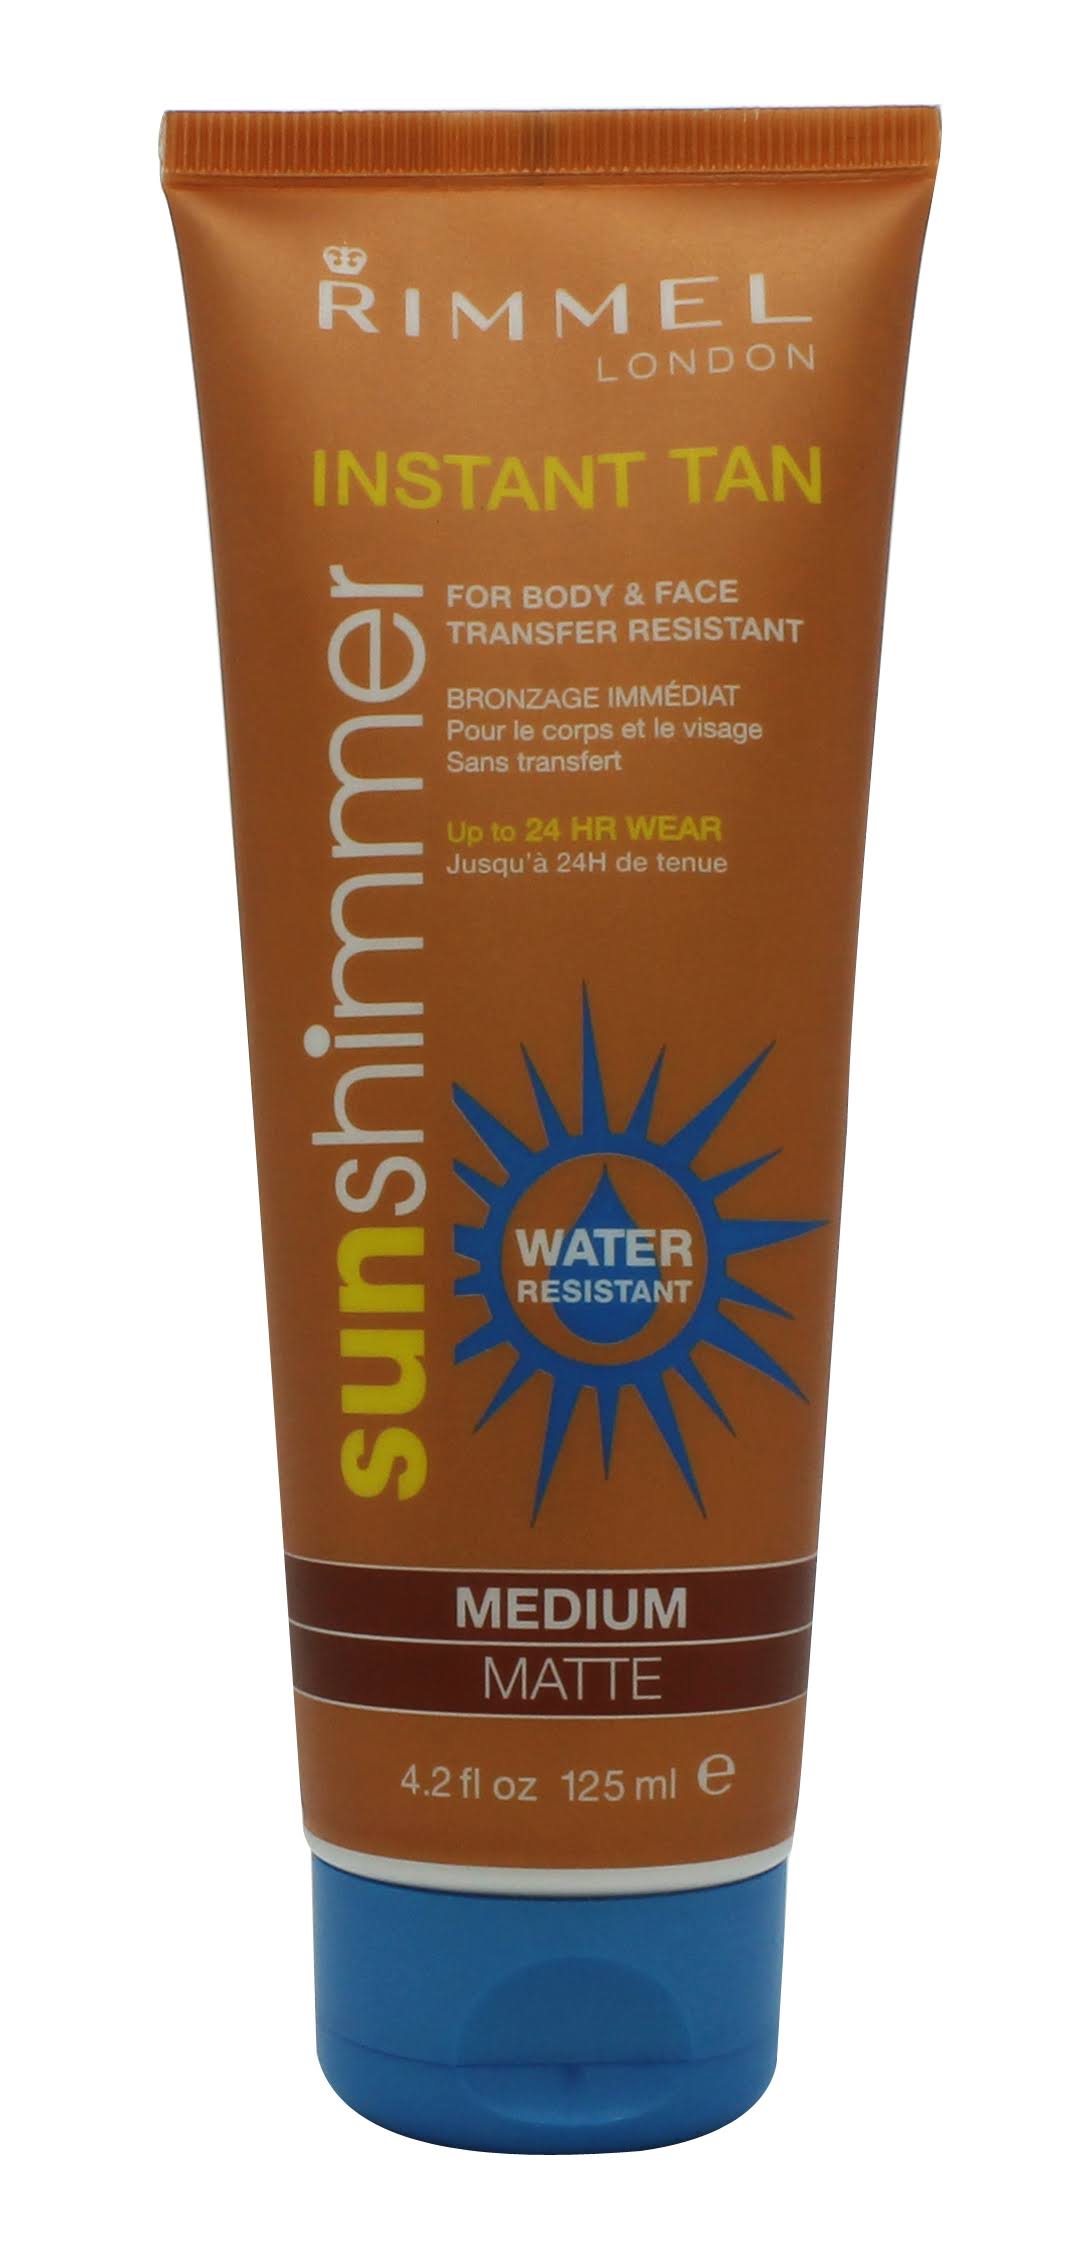 Rimmel Sunshimmer Water Resistant Instant Tan Lotion - Medium Matte, 125ml